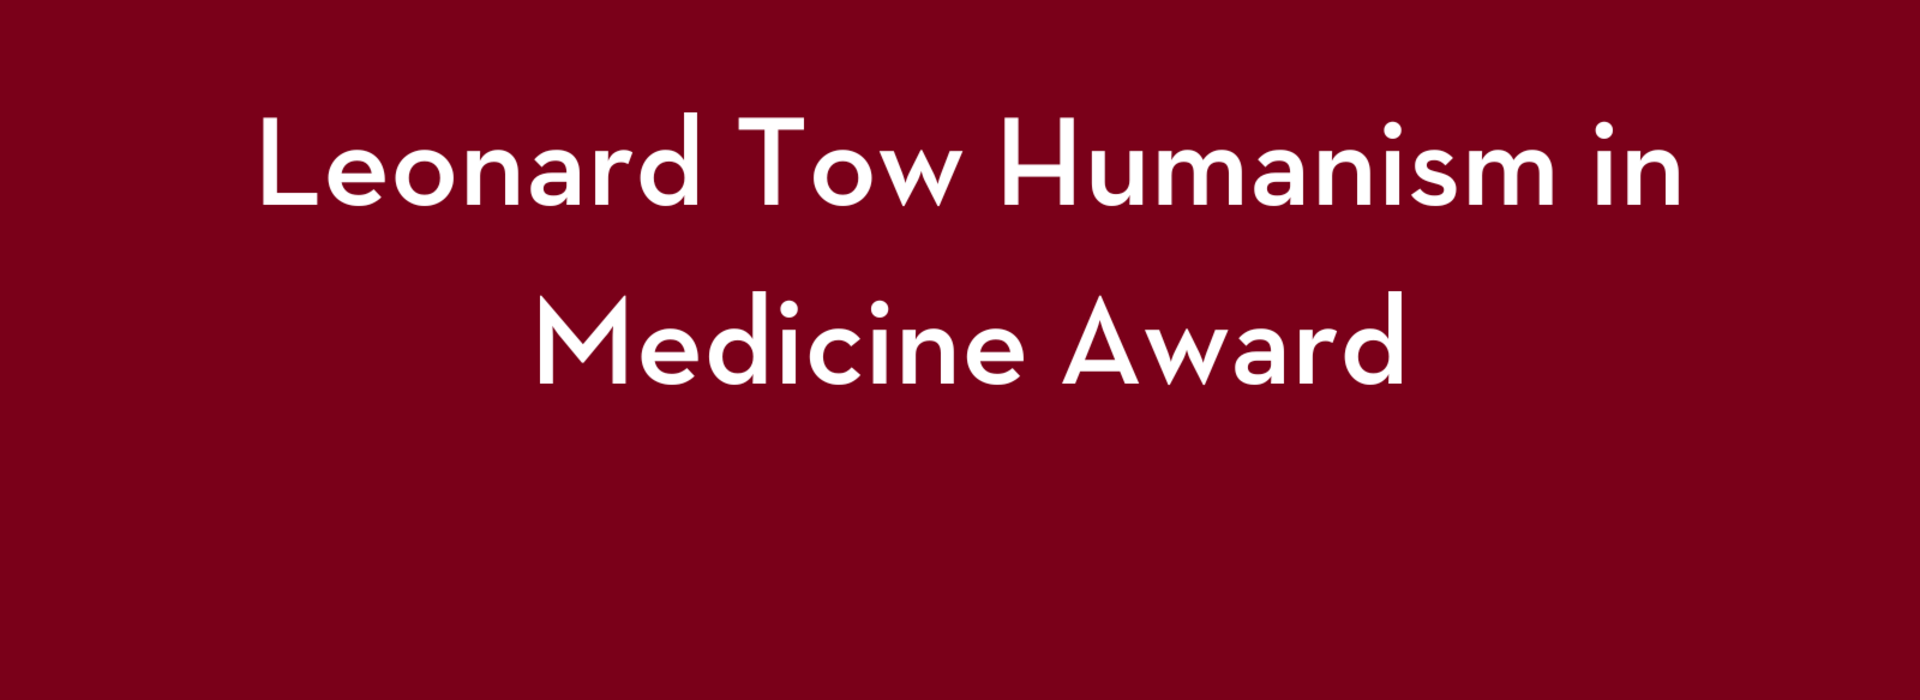 Leonard Tow Humanism in Medicine Award